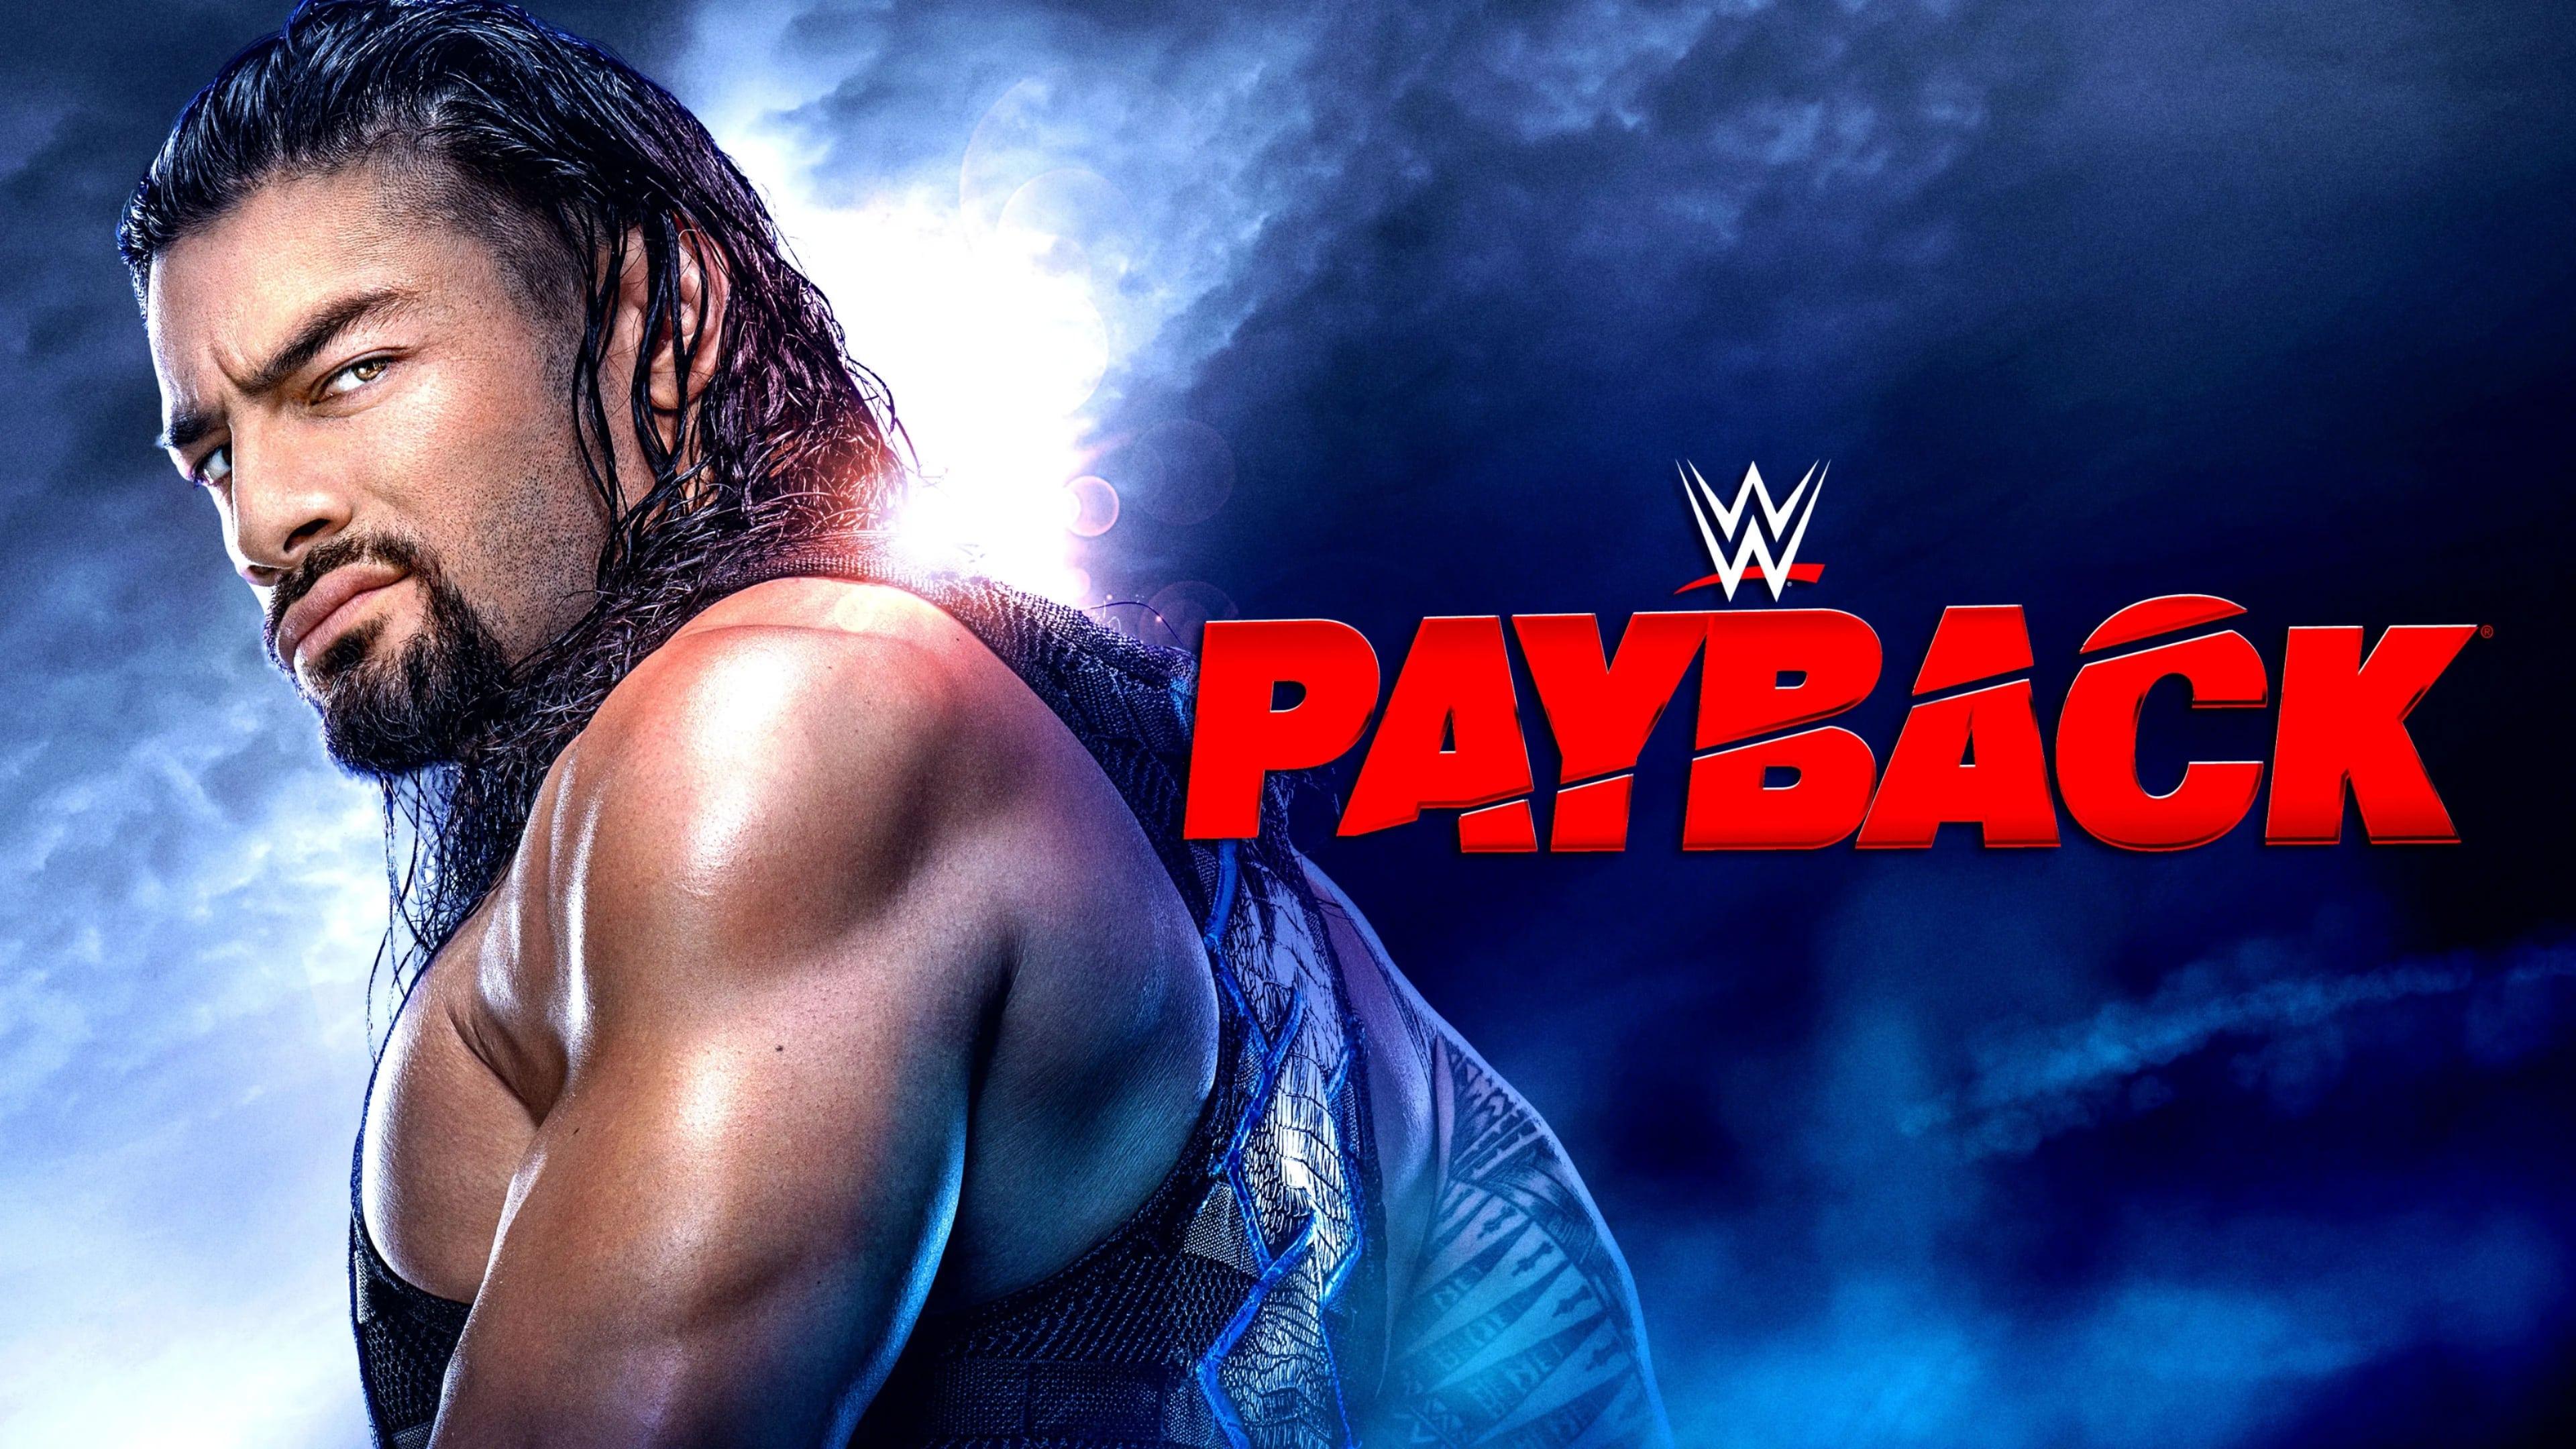 WWE Payback 2020 backdrop